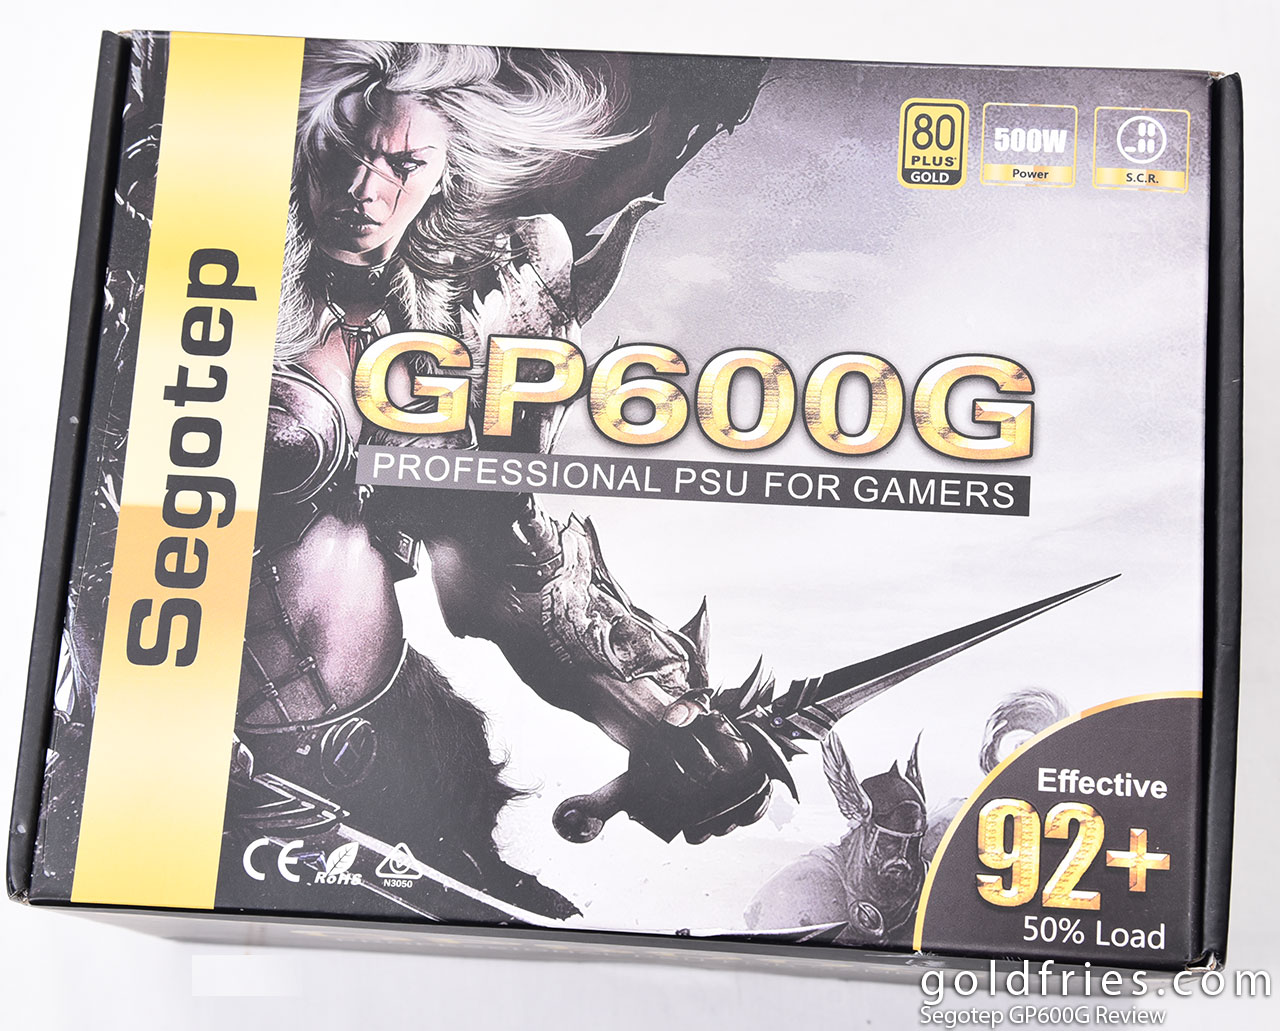 Segotep GP600G Review